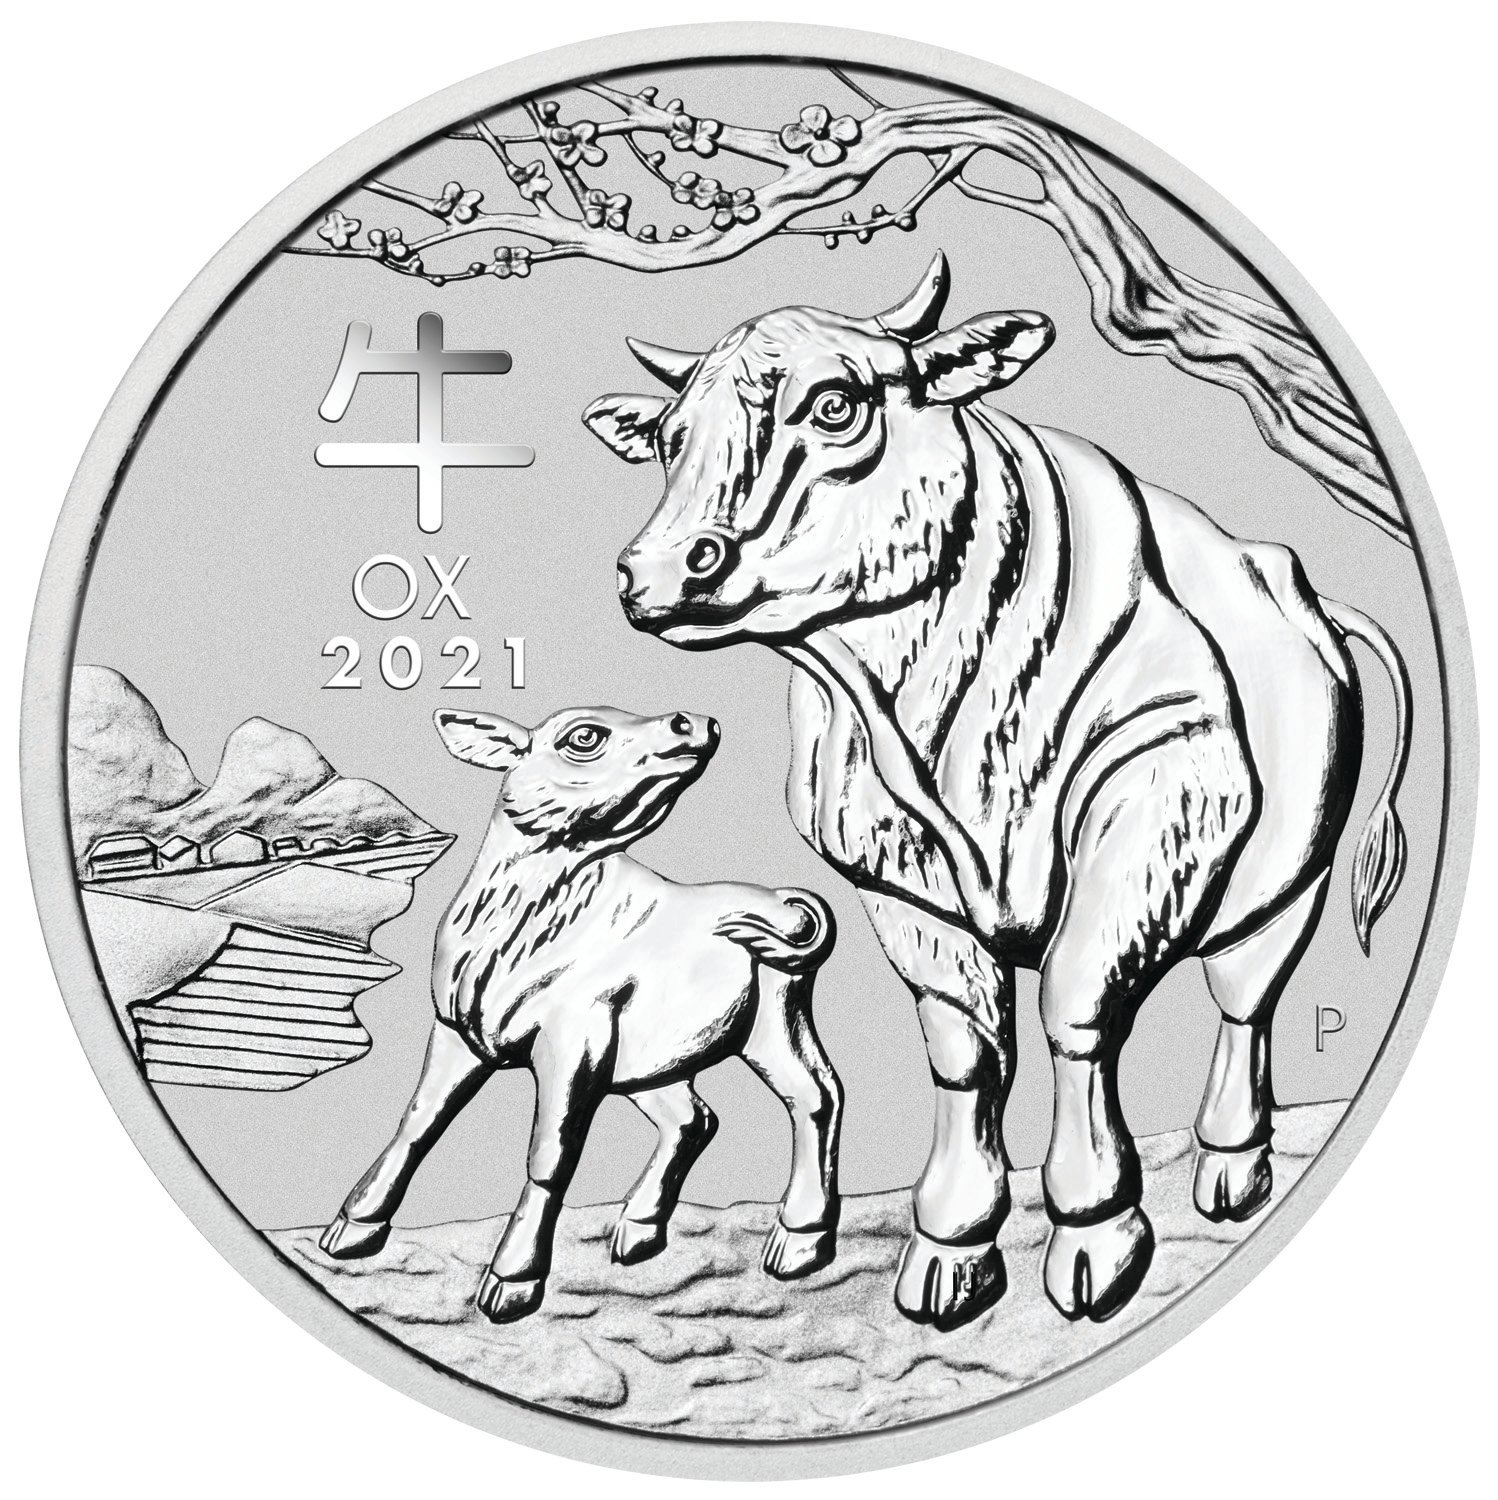 2021 Lunar Ox 2 oz Silver Coin Series III from Perth Mint in Australia